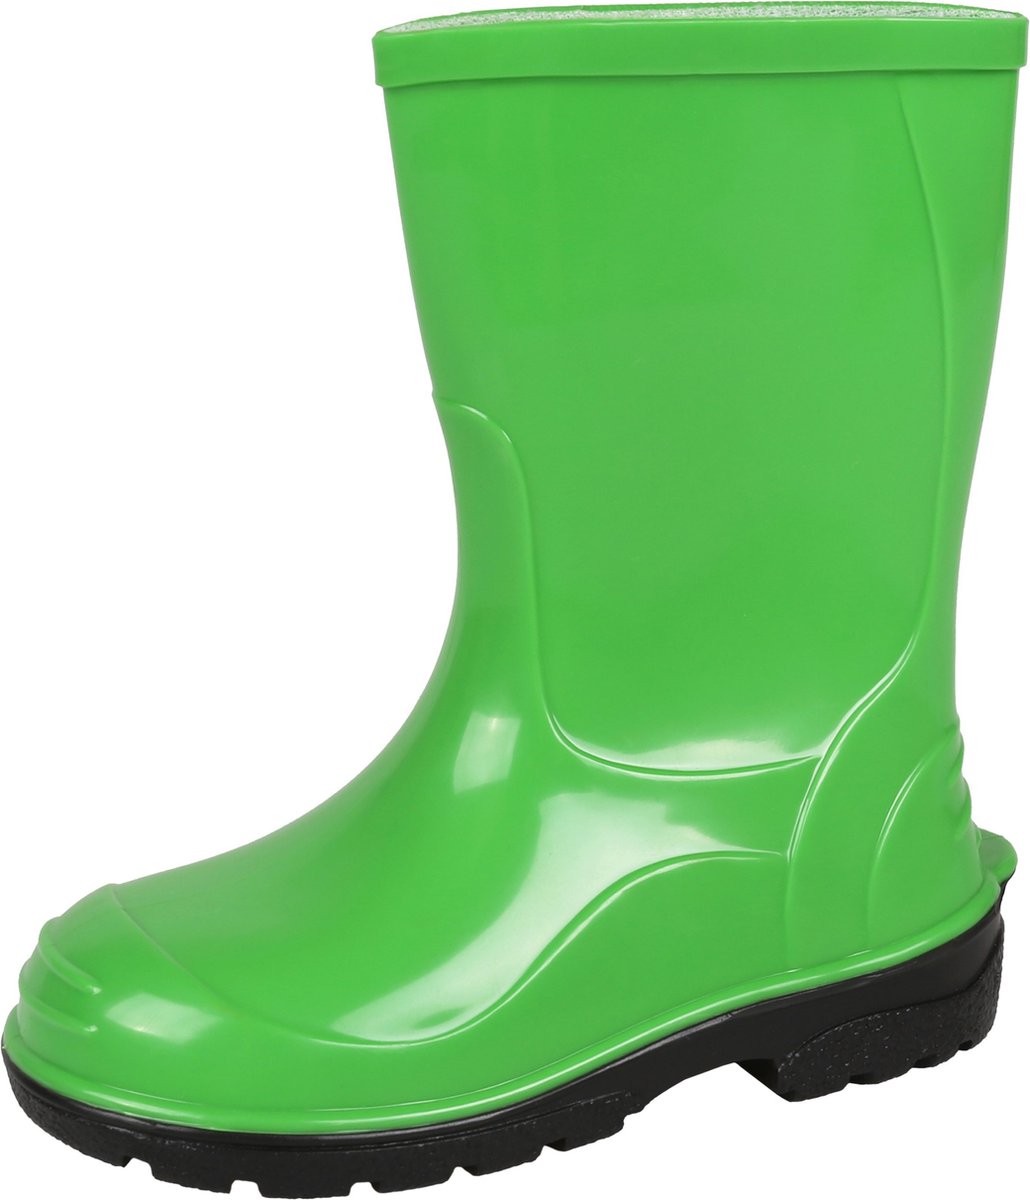 Groene laarzen van PVC materiaal, met antislipzool - OLI LEMIGO / 31